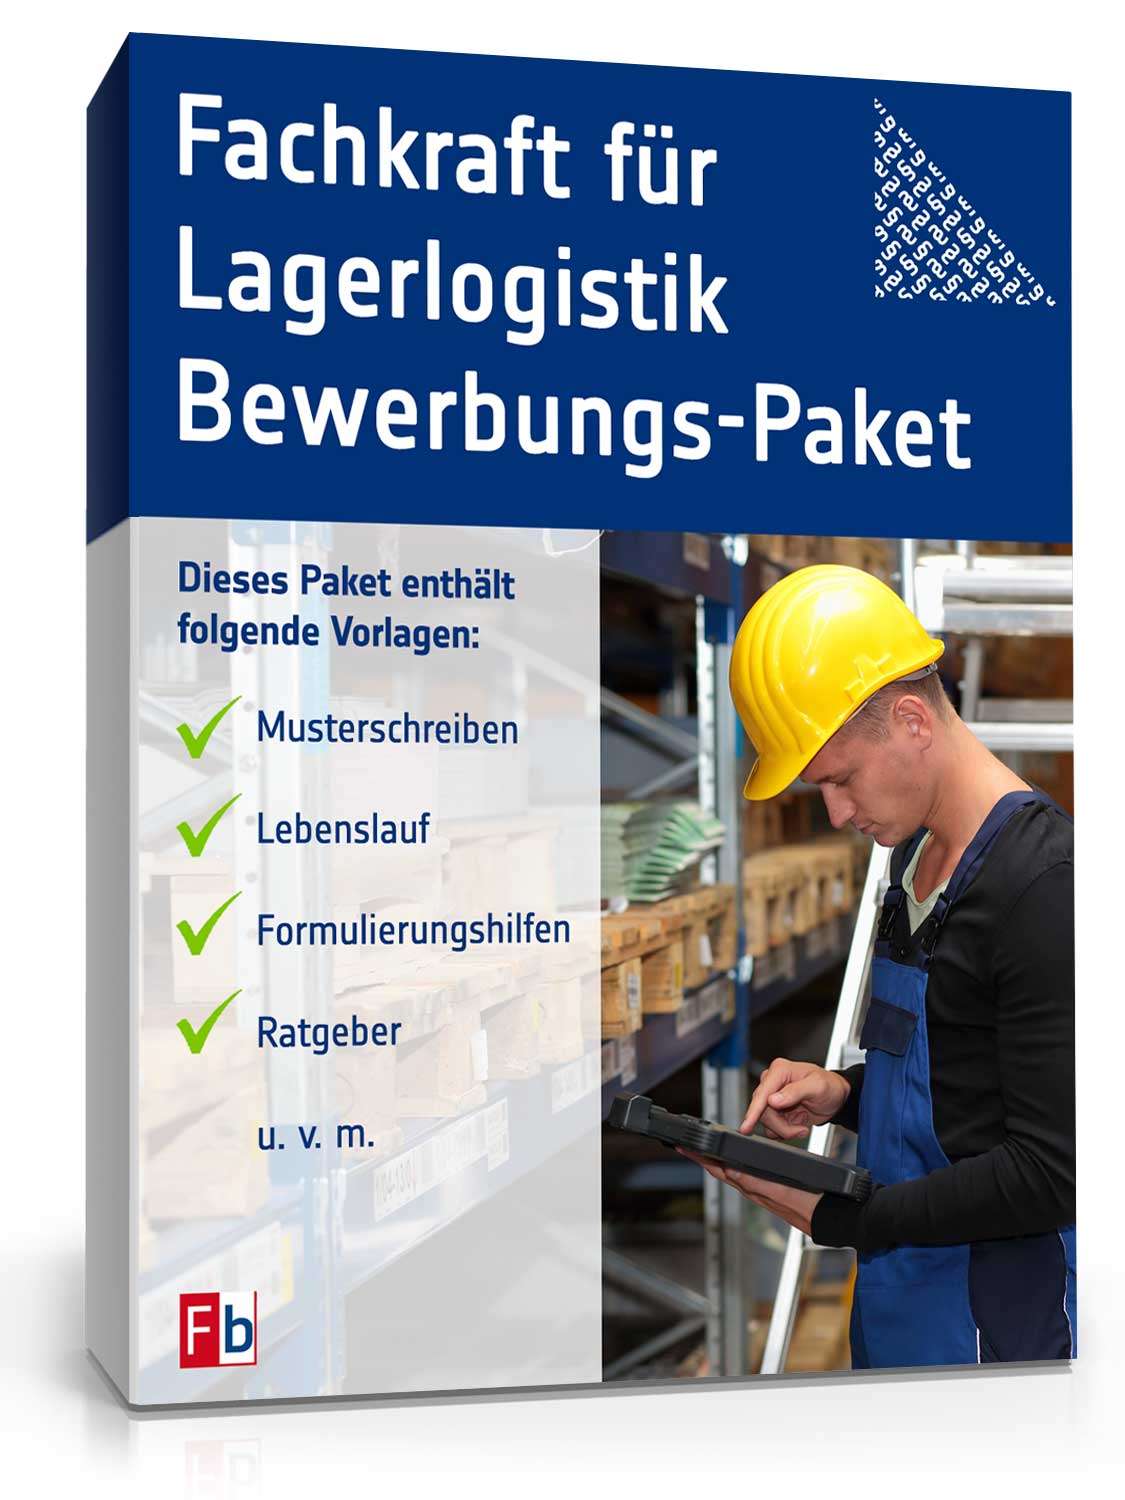 Hauptbild des Produkts: Bewerbungs-Paket Lagerlogistik